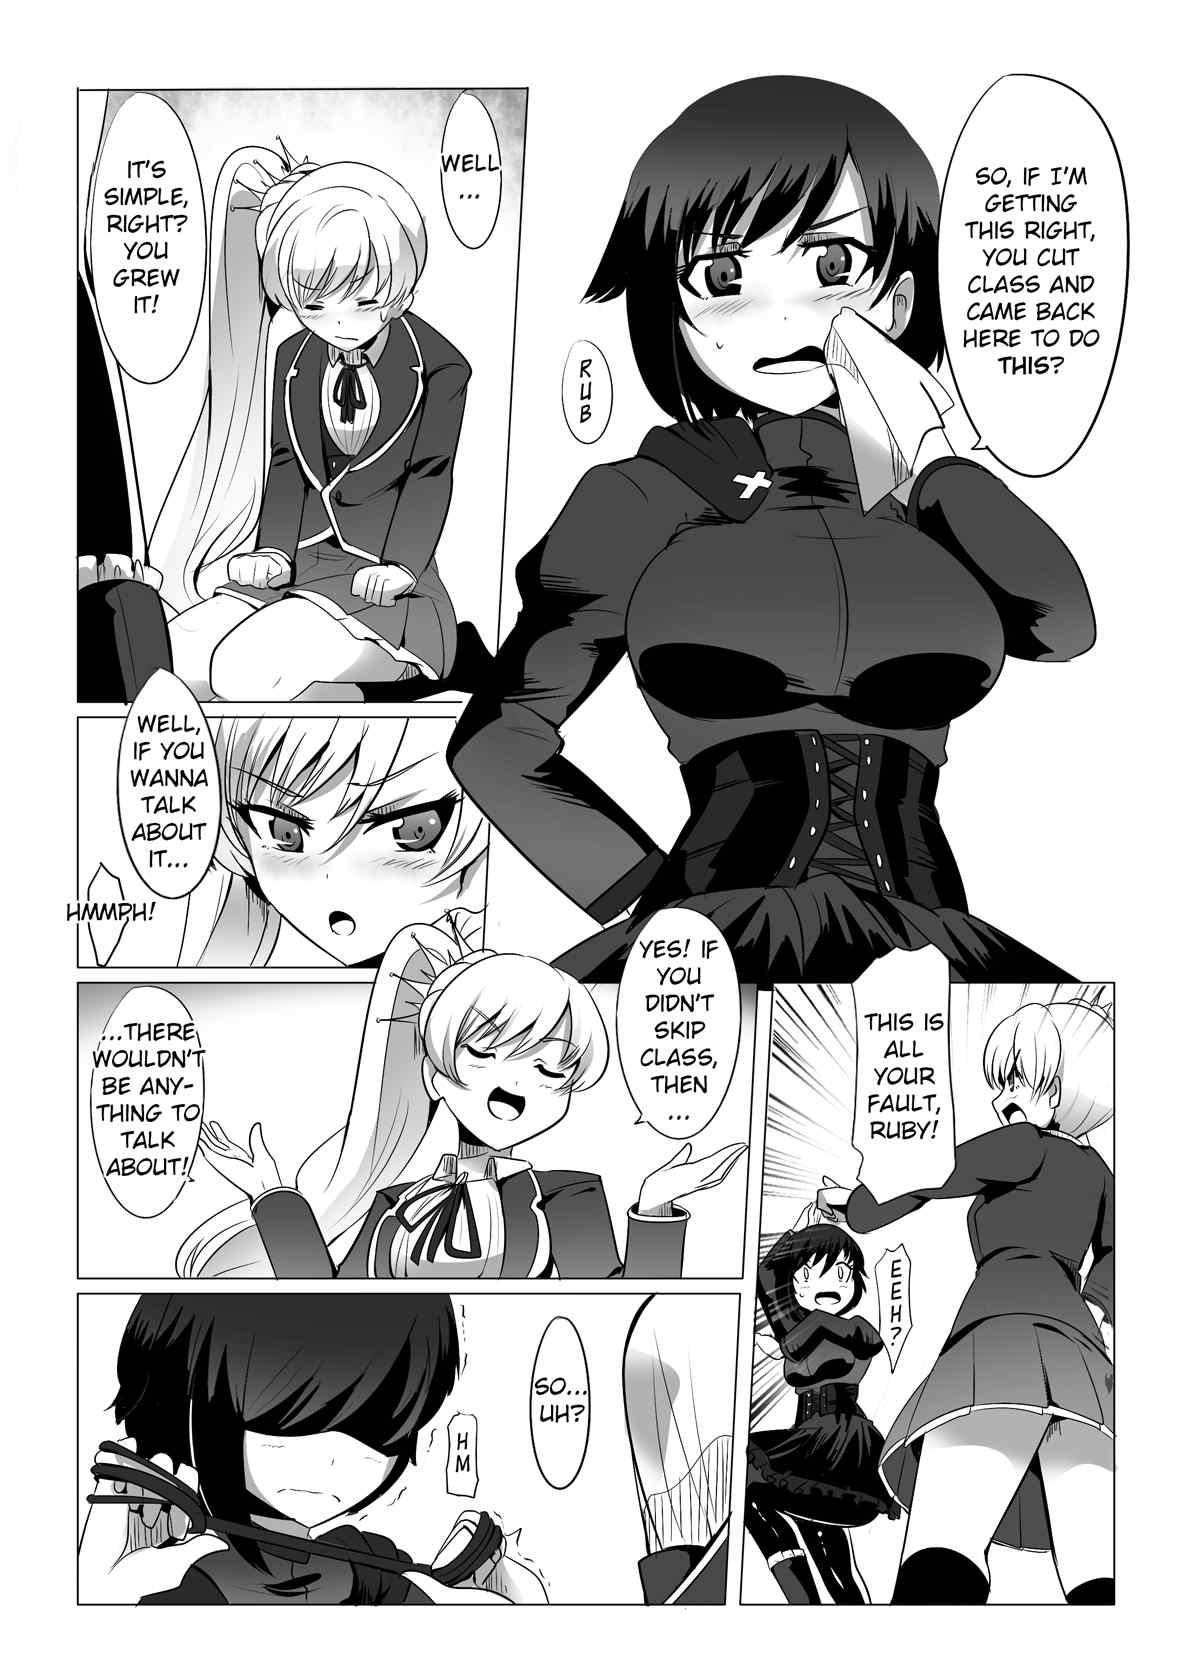 Page 7 | Red And White Mixed Liquid - RWBY Hentai Doujinshi by Magukappu -  Pururin, Free Online Hentai Manga and Doujinshi Reader